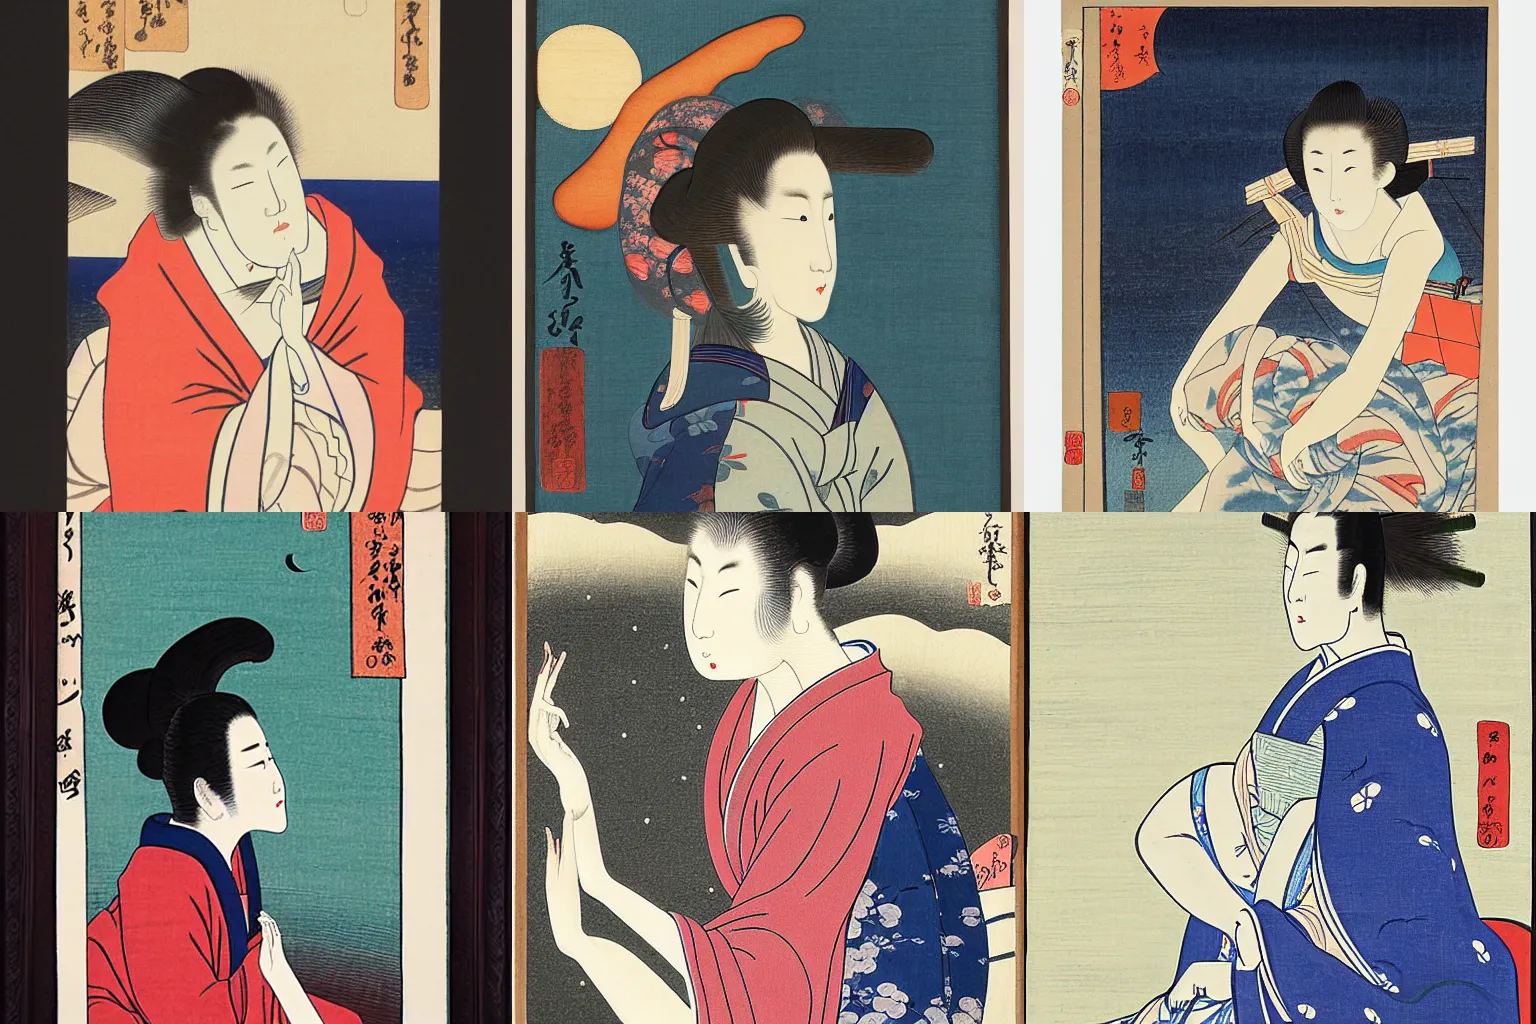 Prompt: Young woman gazing at moon, ukiyo-e style, tempera